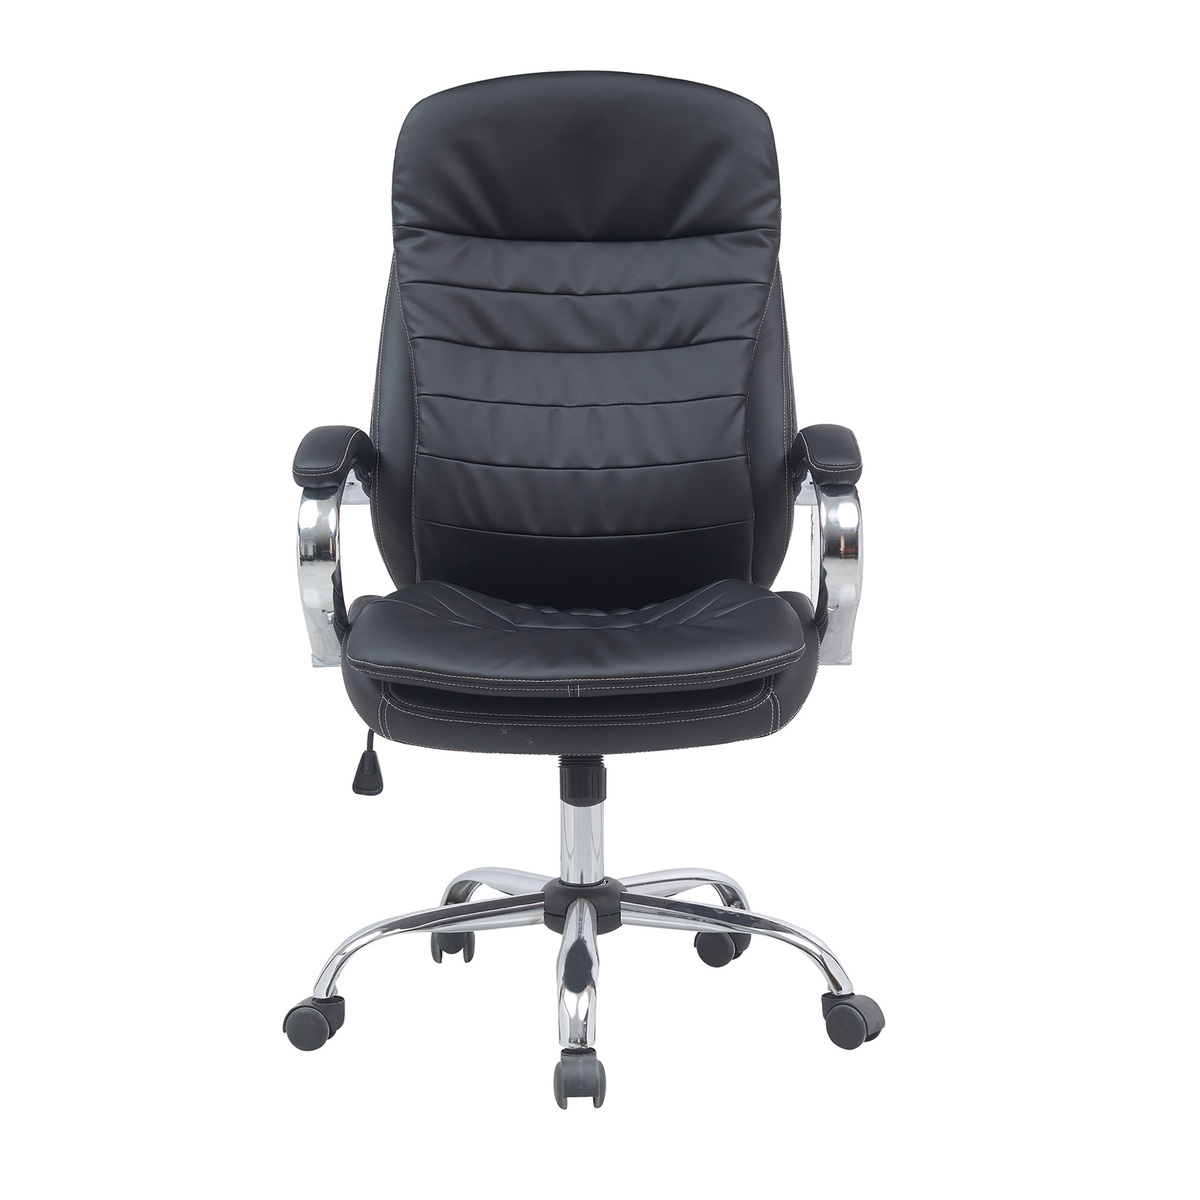 Maple Leaf Office Chair Black SA-1693A